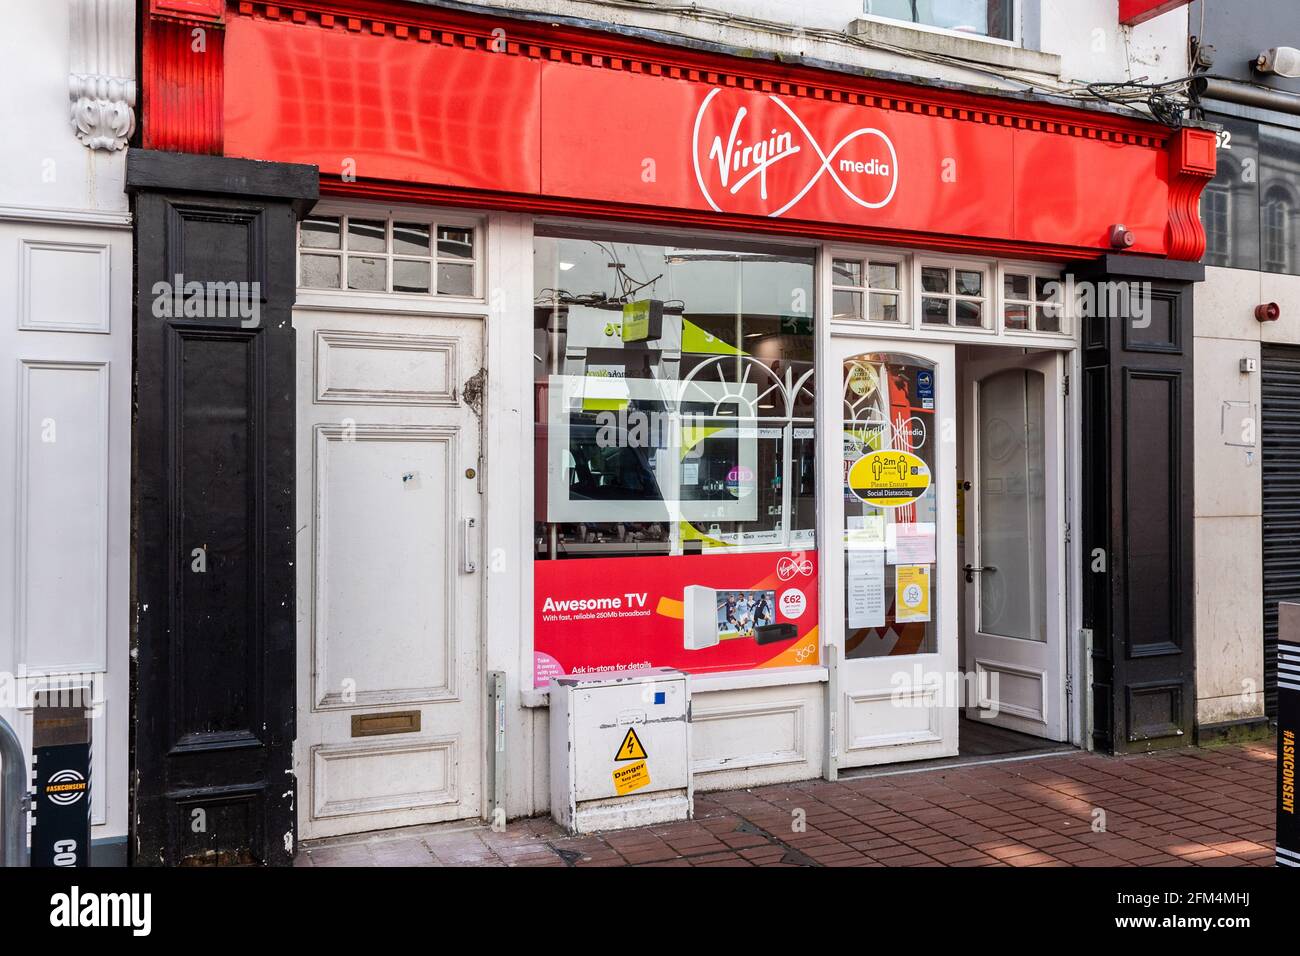 Virgin Media phone shop on Oliver Plunkett Street, Cork, Ireland. Stock Photo